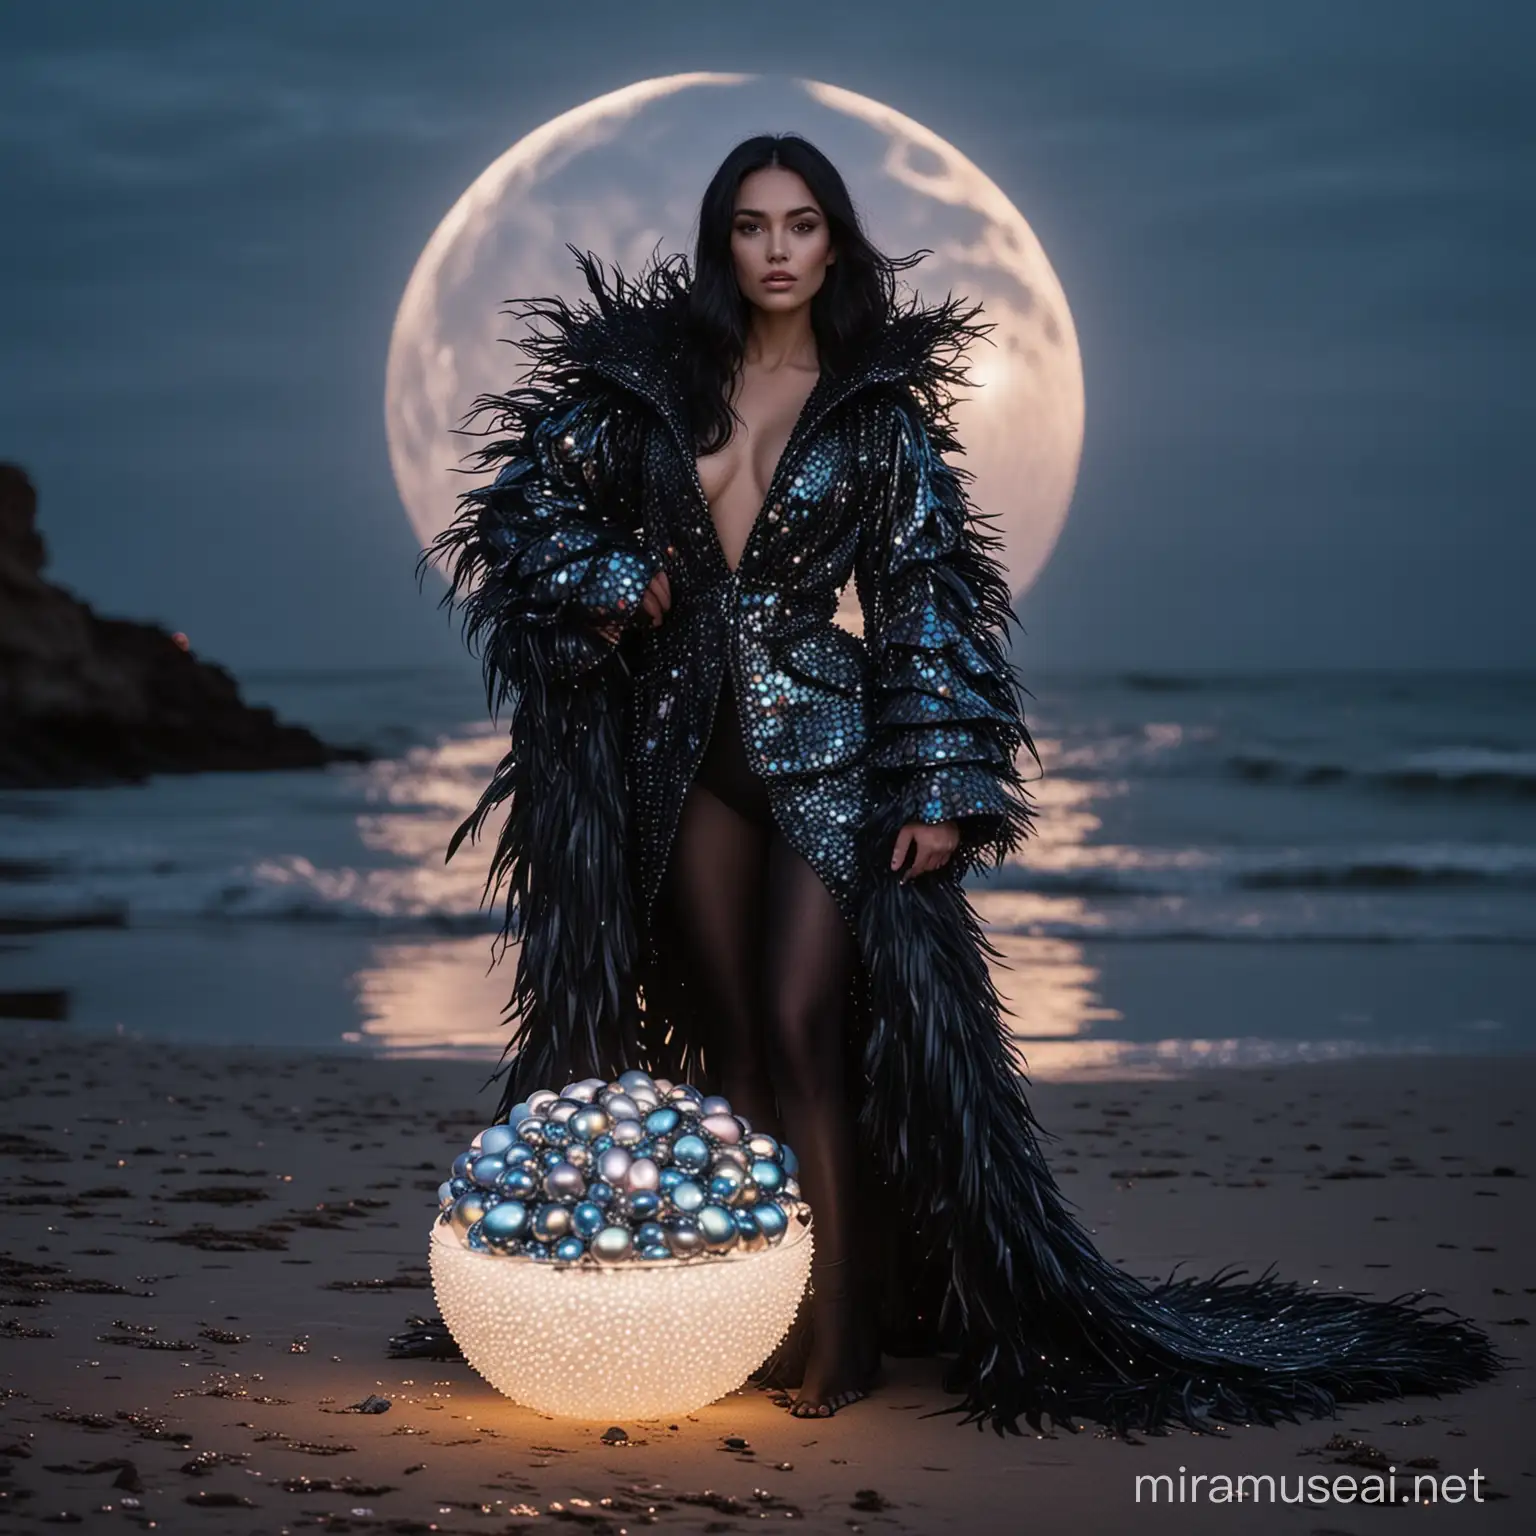 Neon Woman with Metallic Dragon in Moonlit Beach Setting